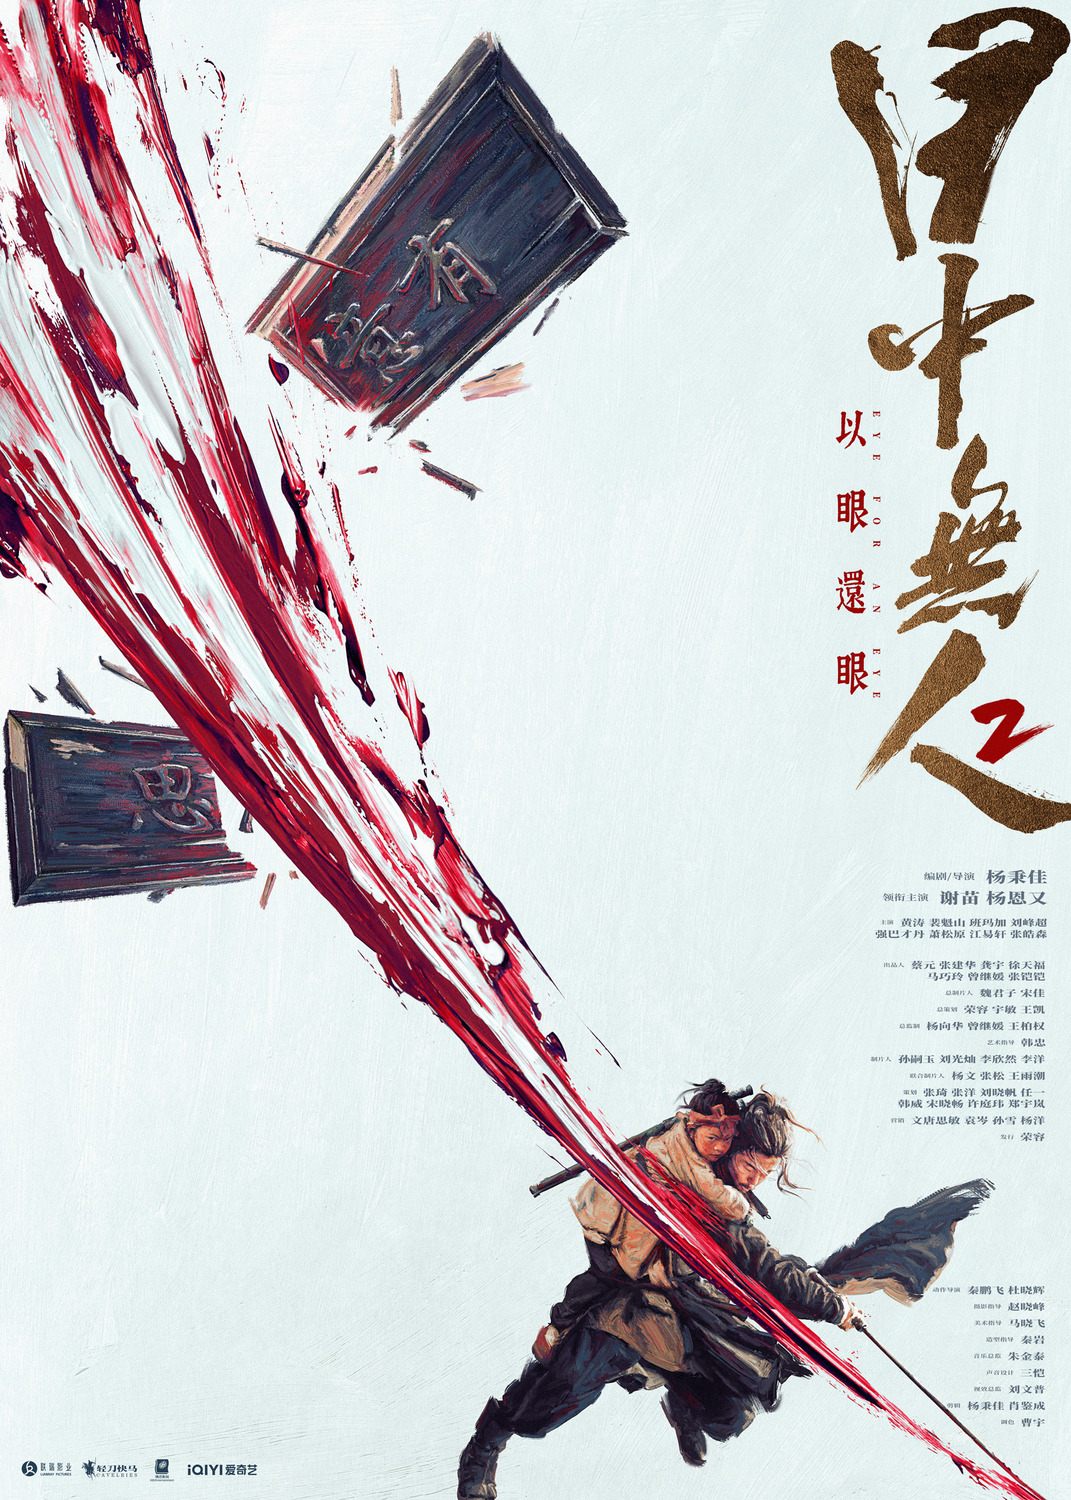 Extra Large Movie Poster Image for Mu zhong wu ren 2 